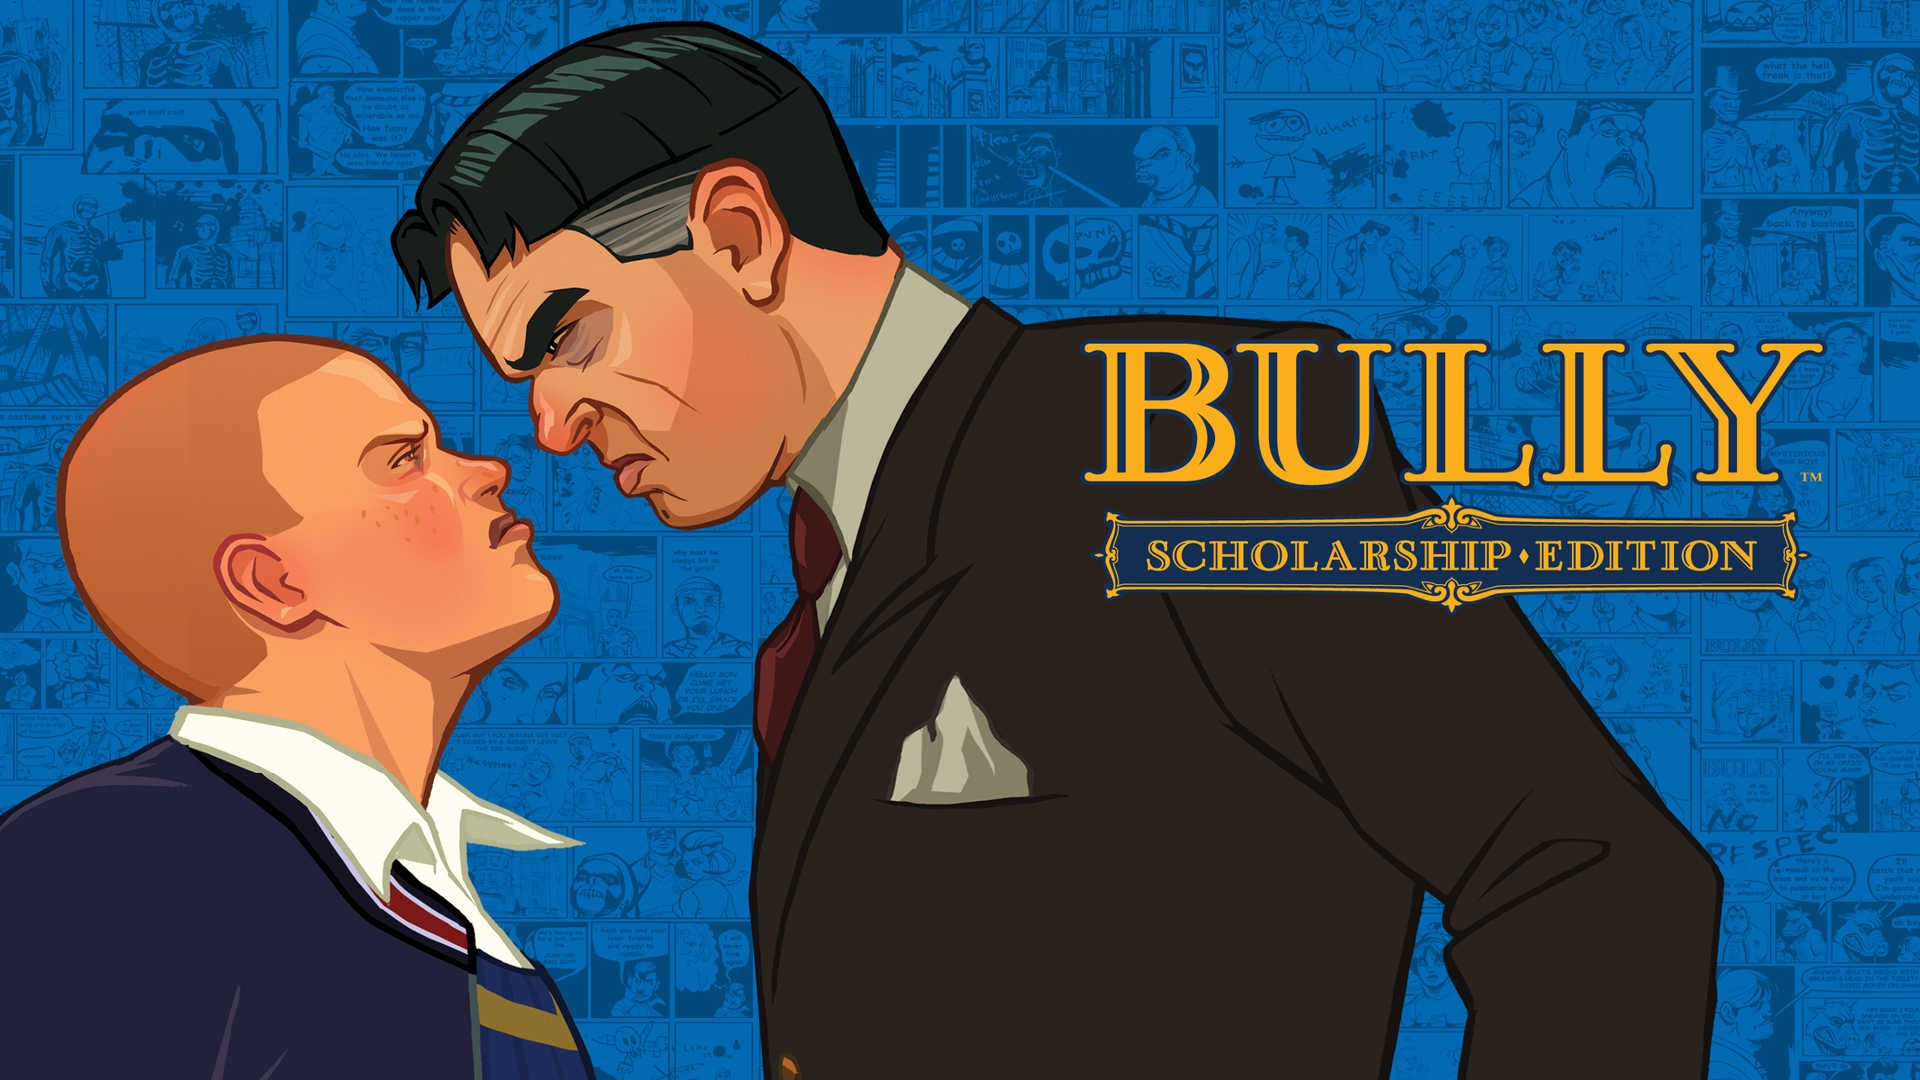 Bully 2 - Announcement Trailer